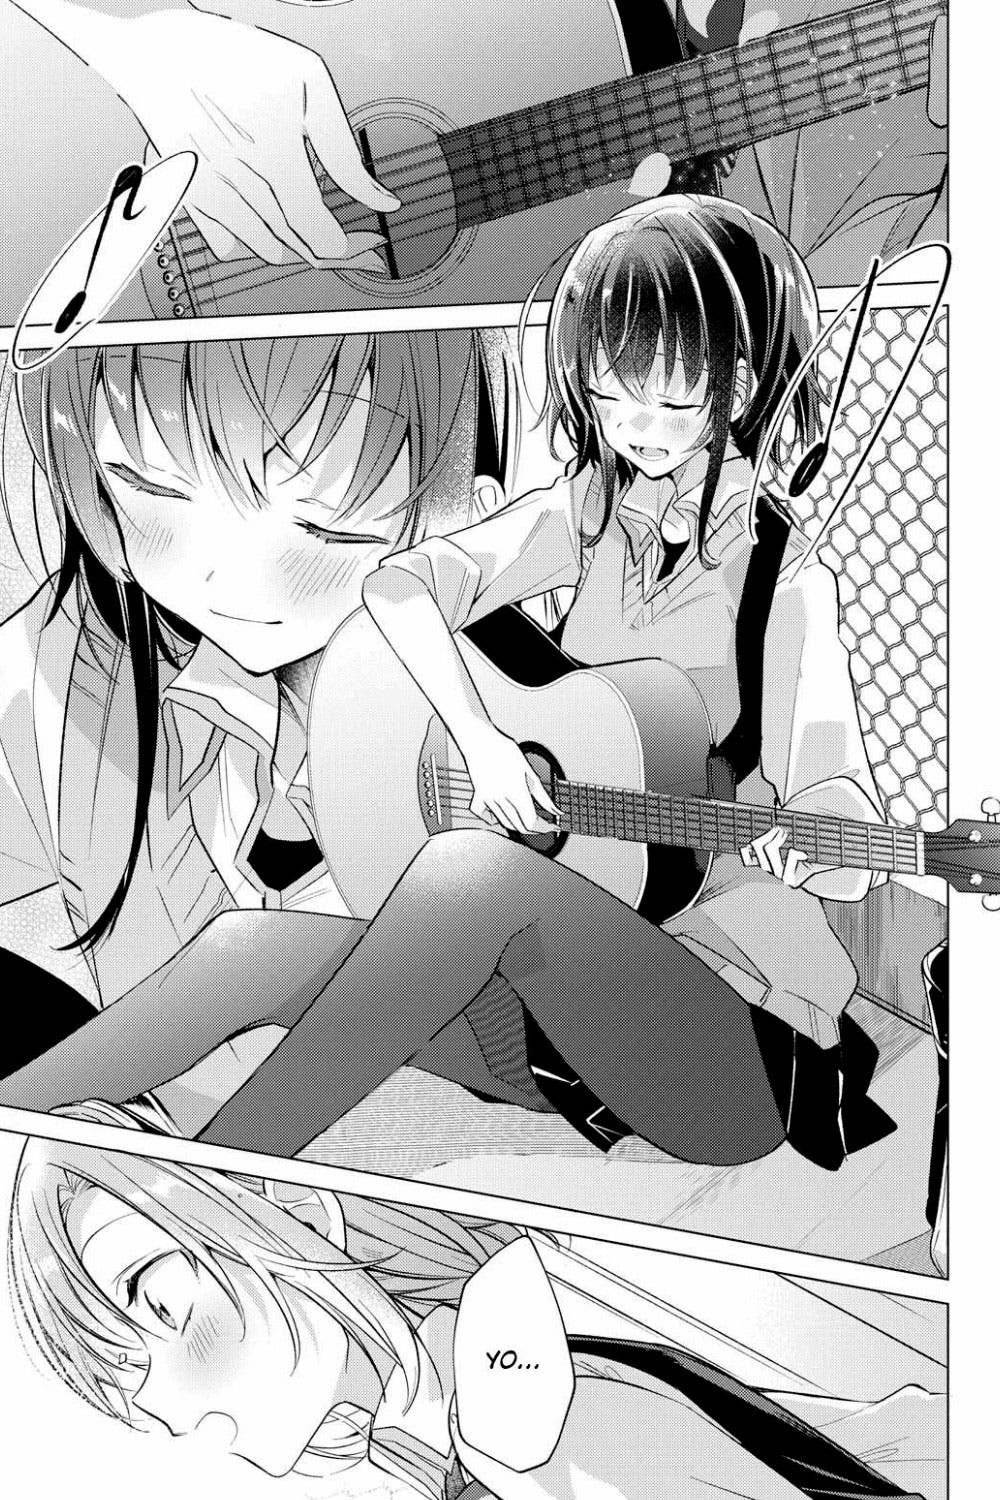 Página del manga yuri "whispering you a love song" que muestra a Yori